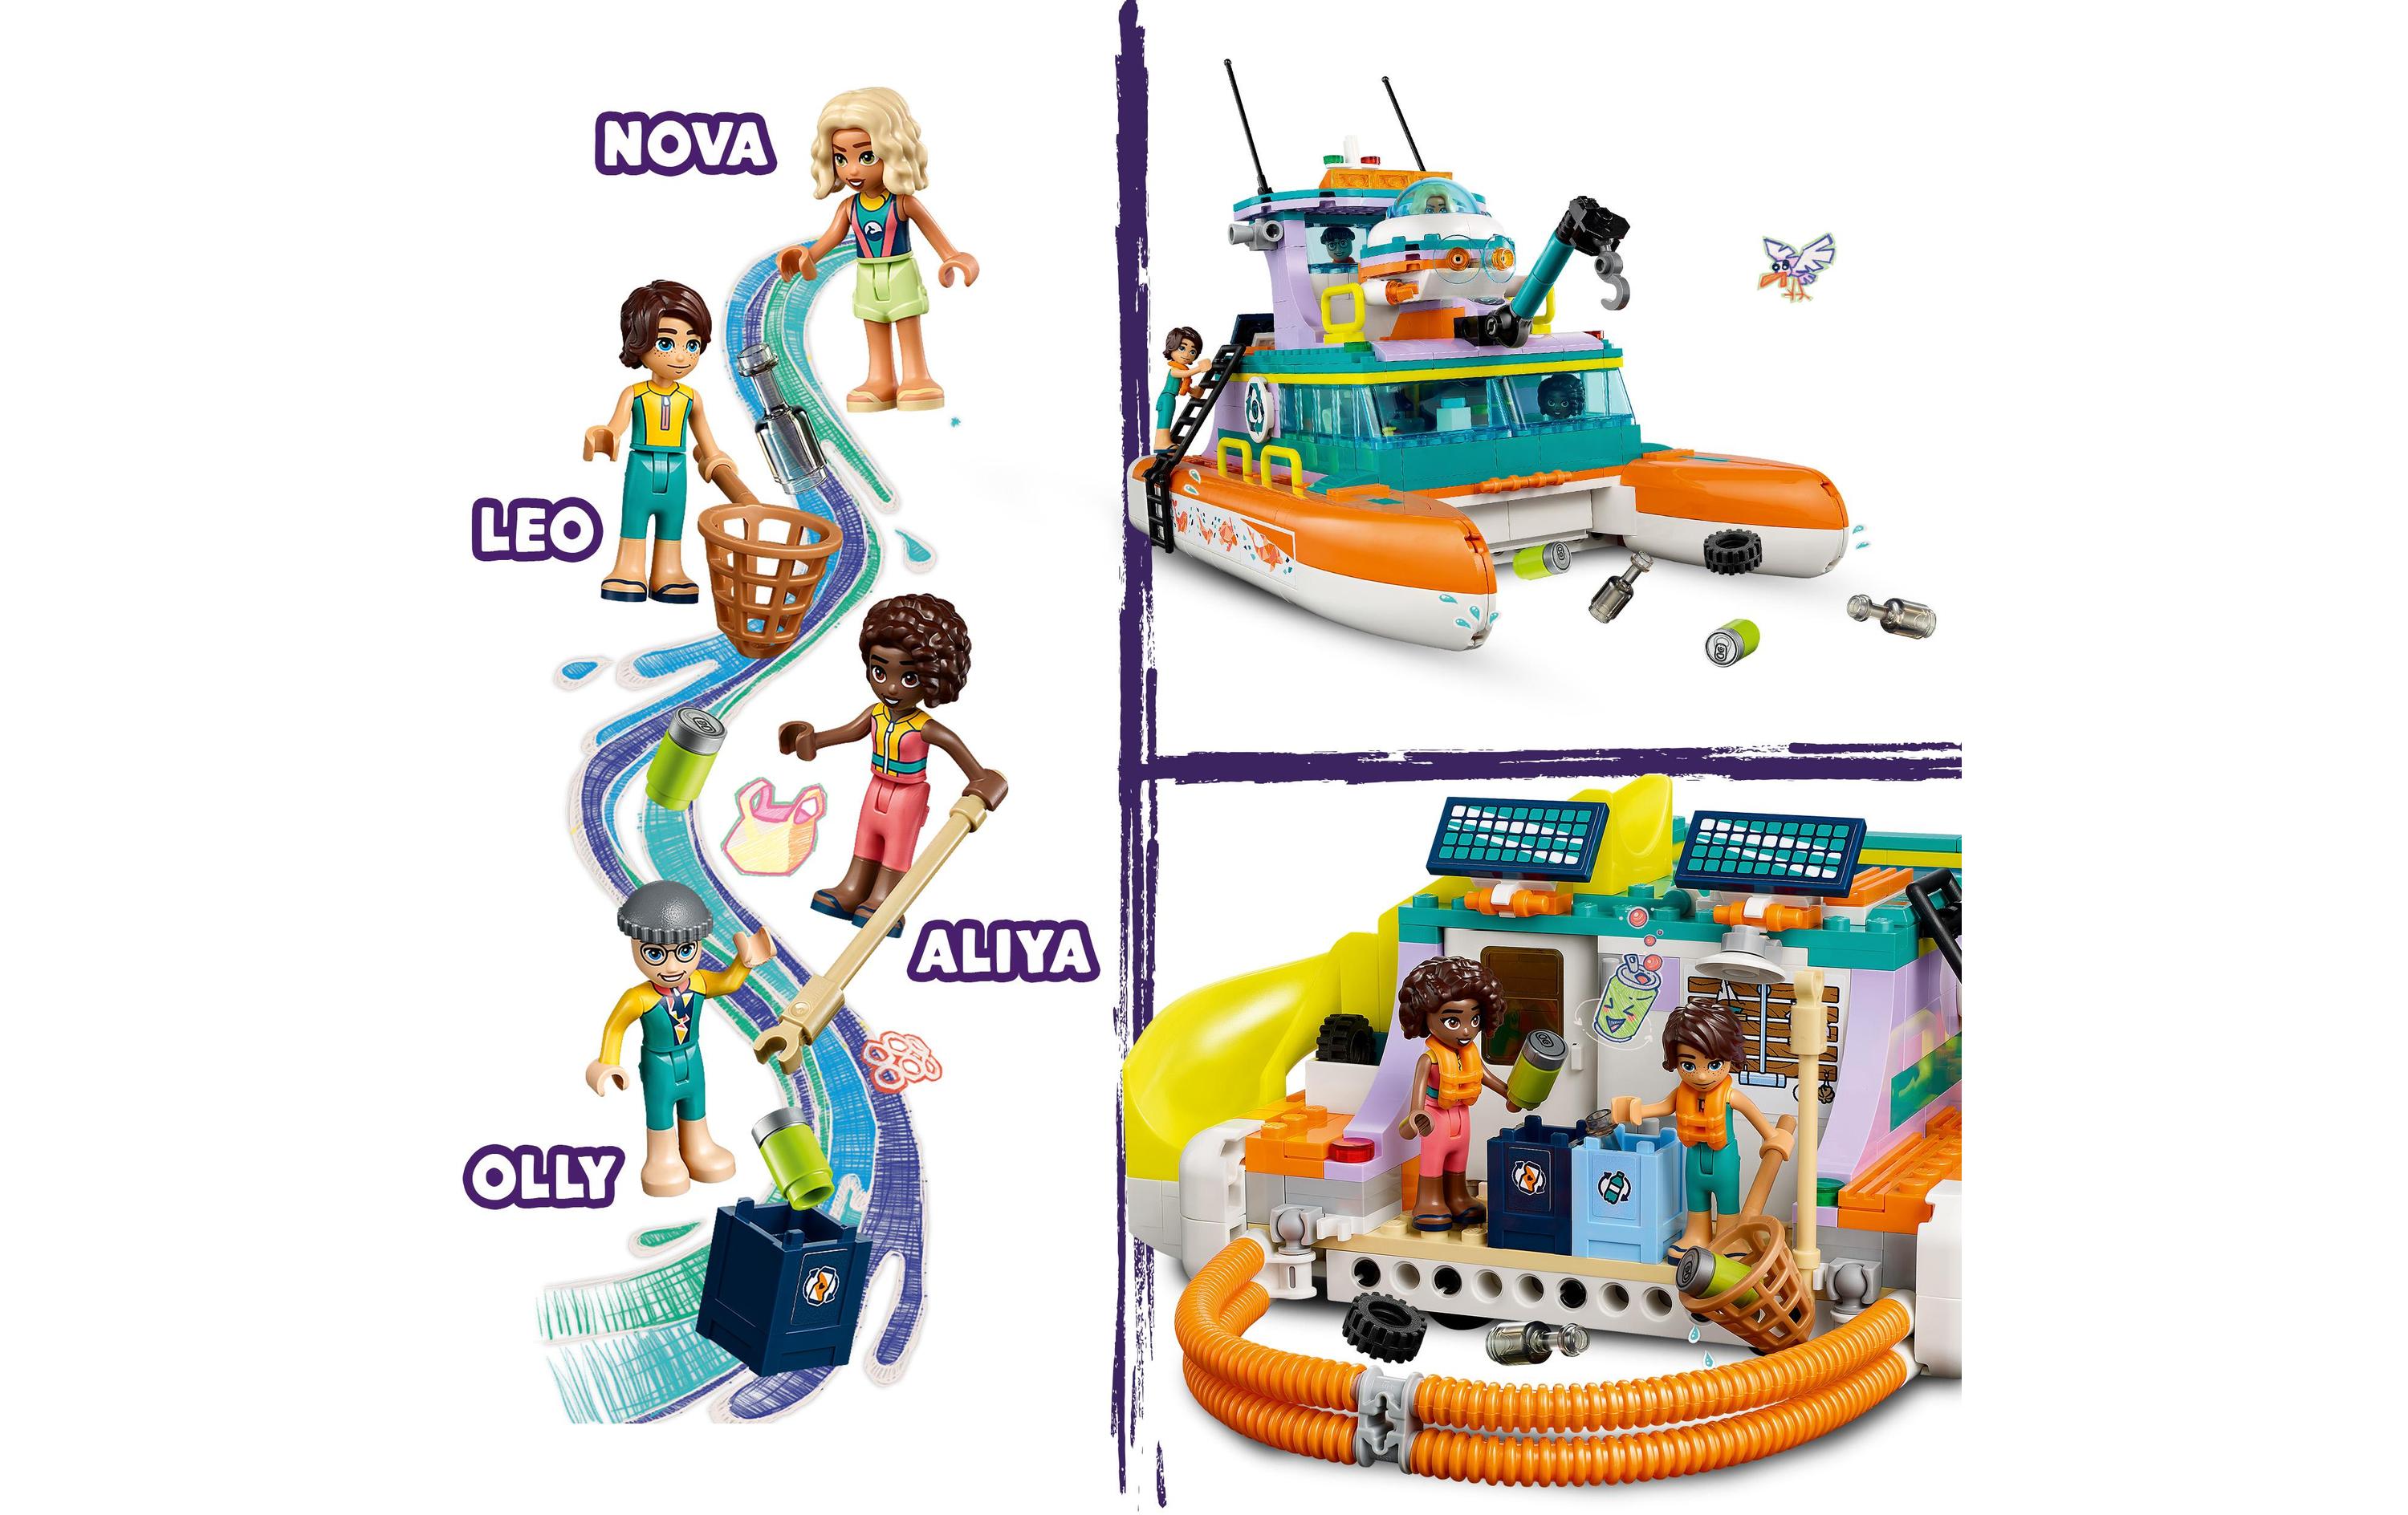 LEGO® Friends Seerettungsboot 41734